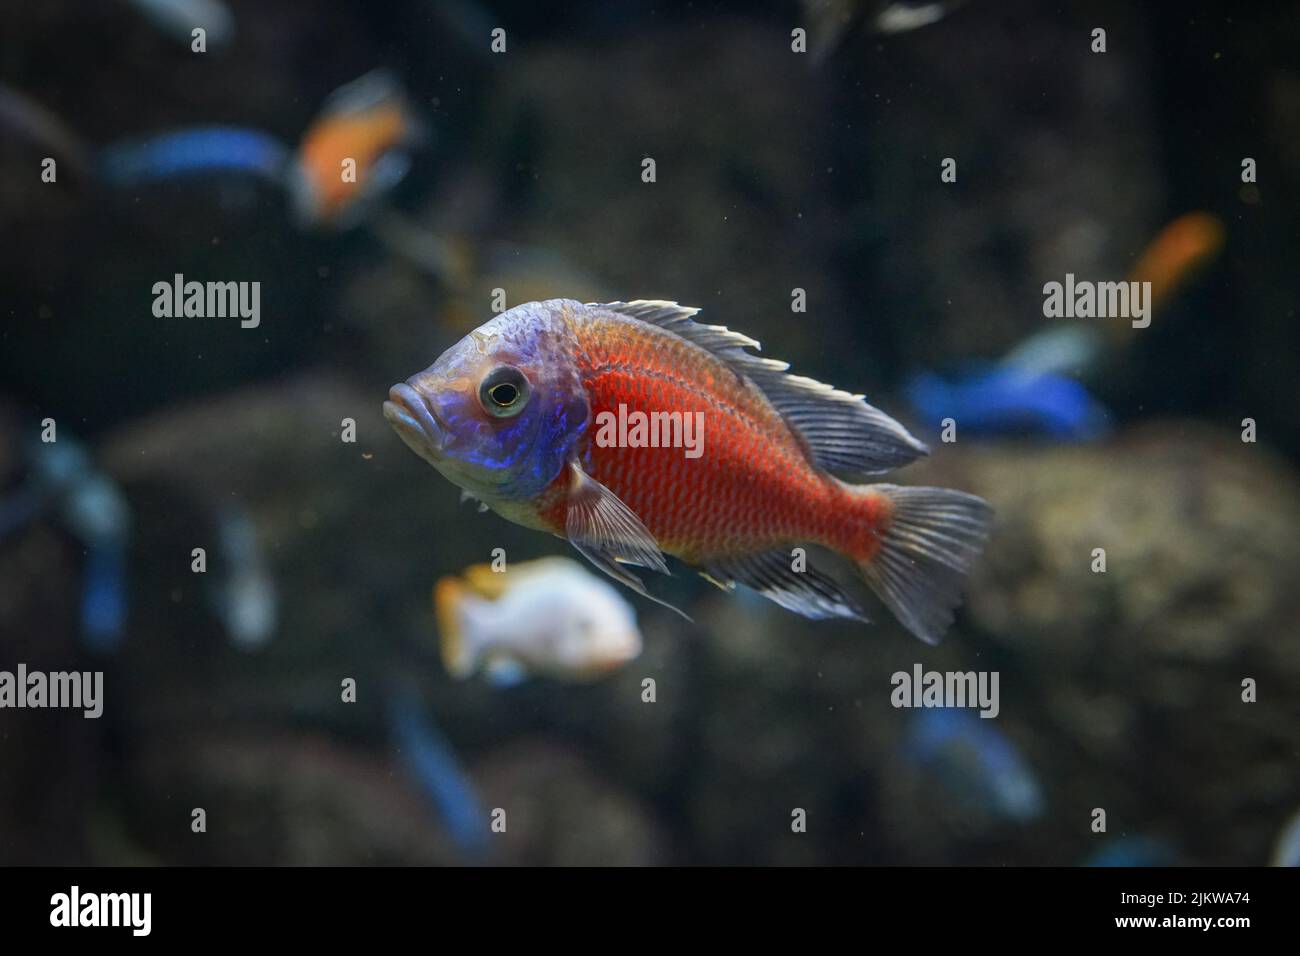 A closeup of Copadichromis borleyi fish in the aquarium Stock Photo